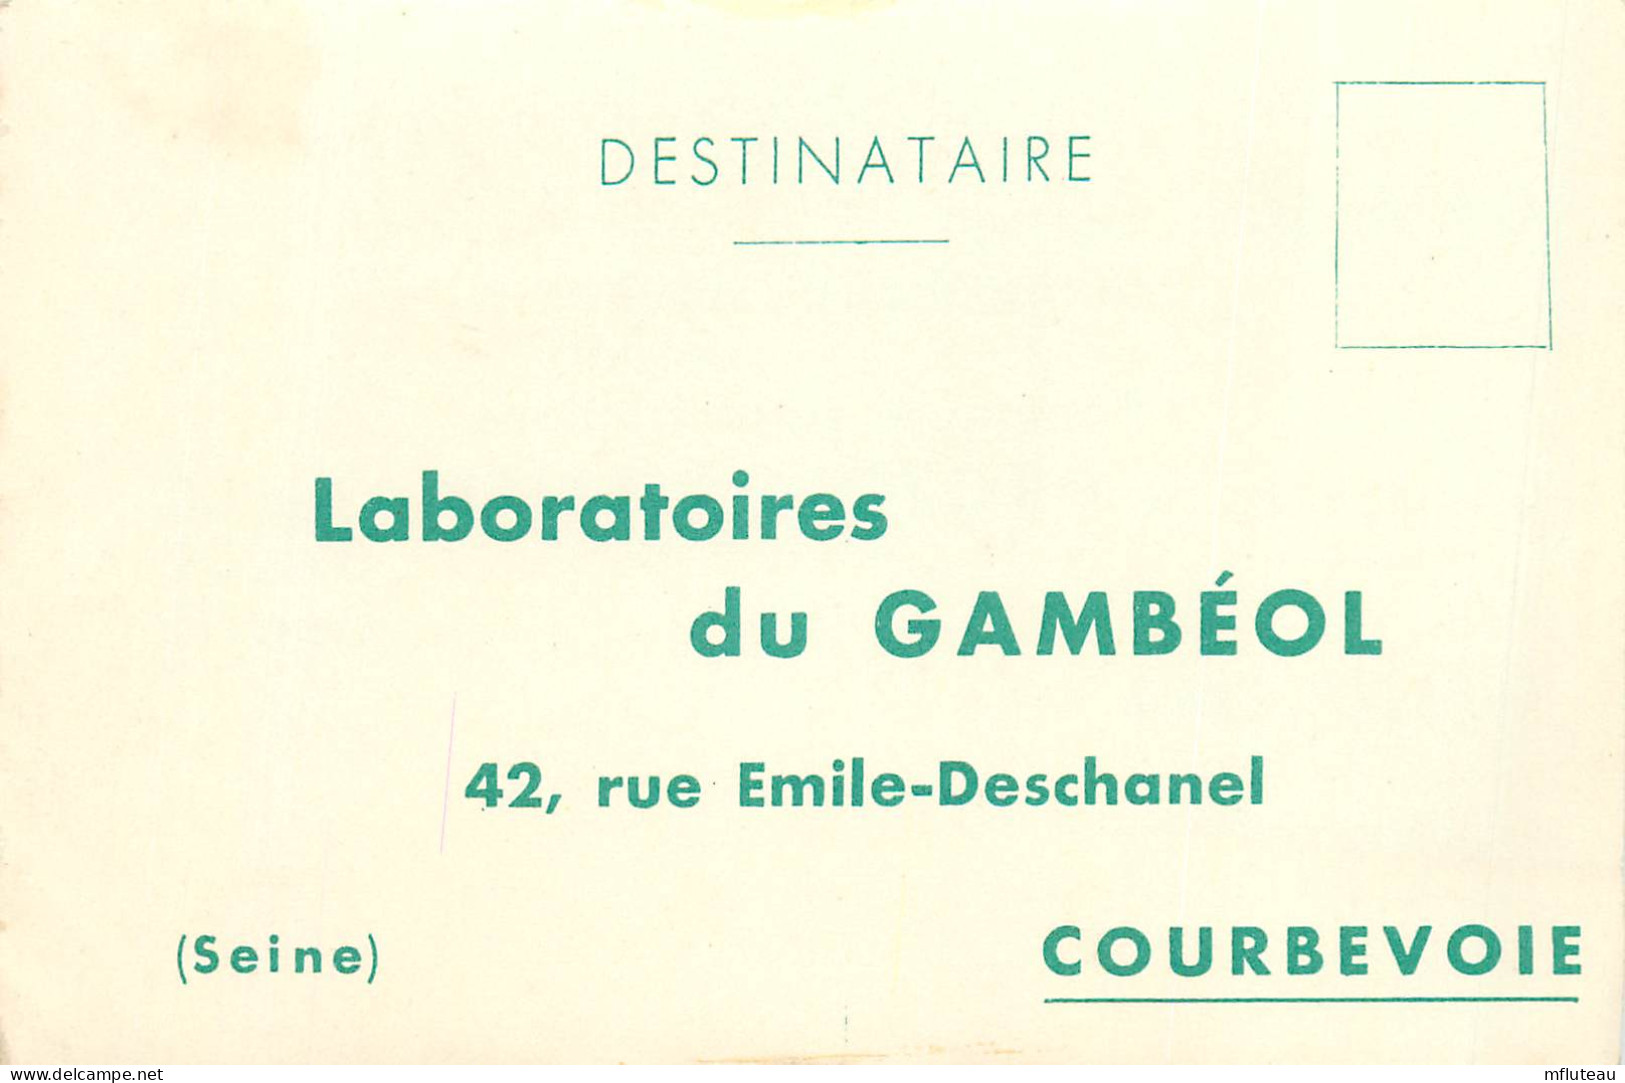 92* COURBEVOIE Labo Du Gambeol   RL10.0438 - Salute